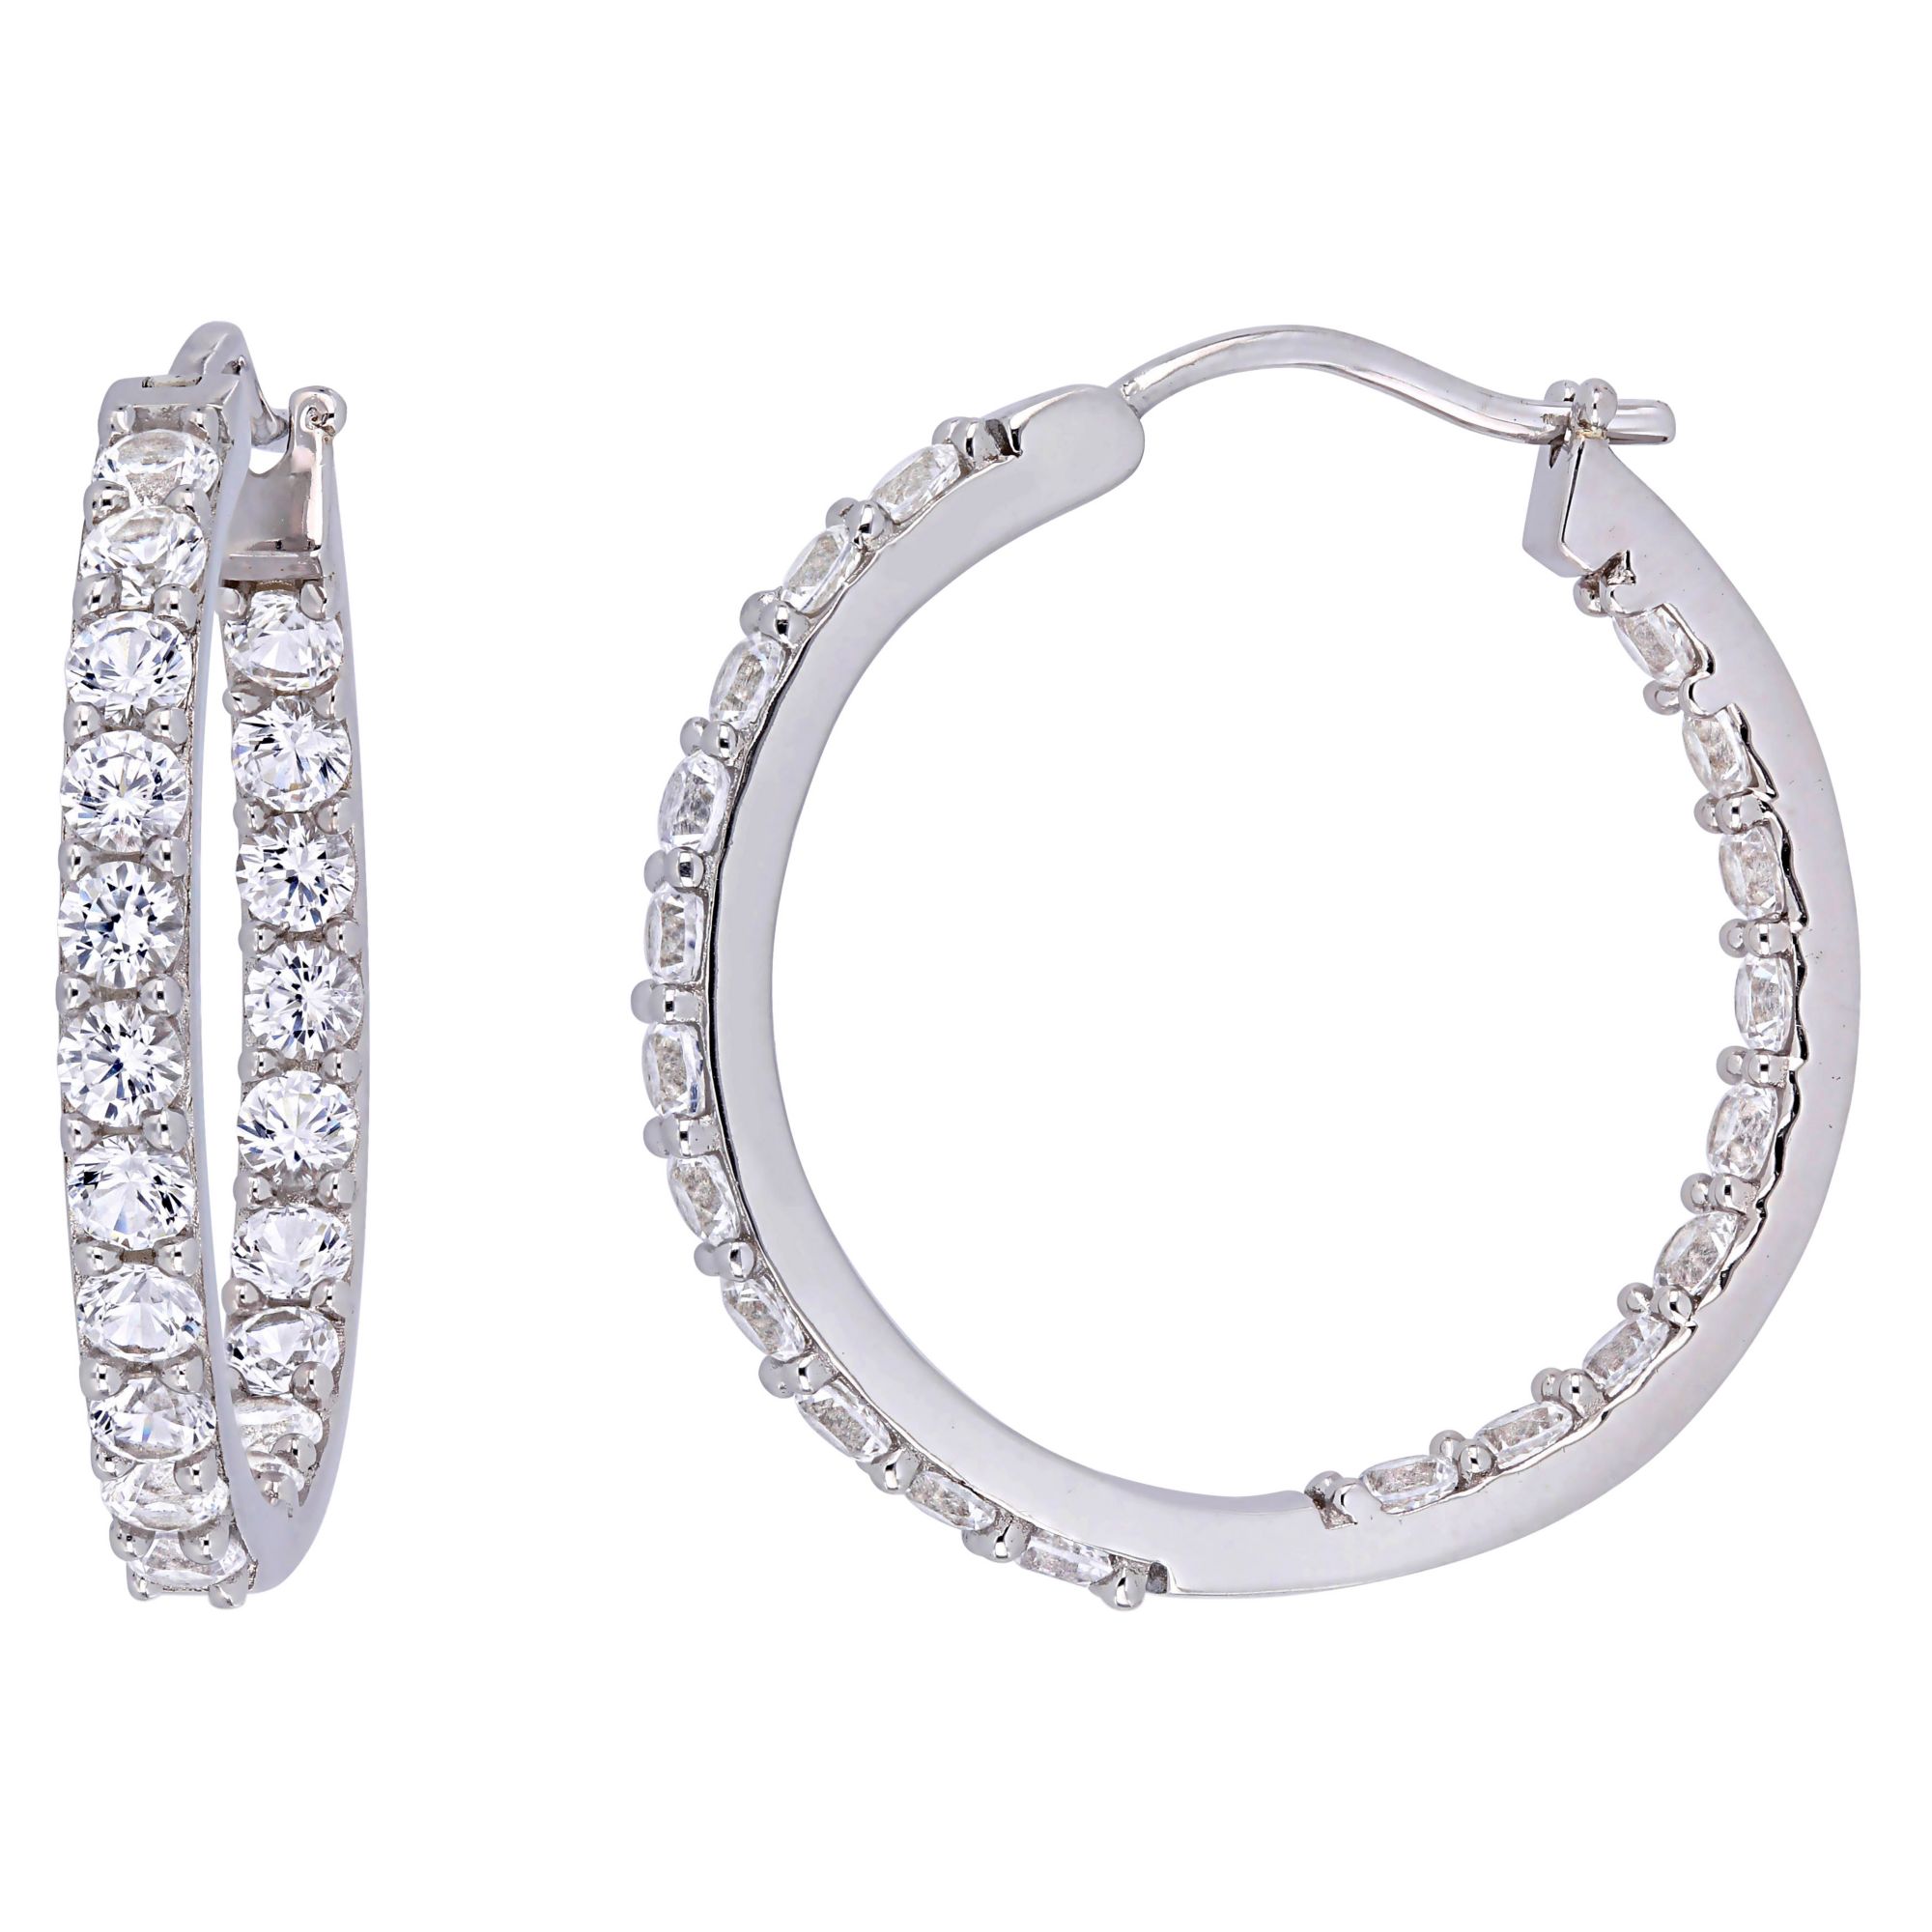 3.5 ct. t.g.w. Created White Sapphire Inside Outside Hoop Earrings in Sterling Silver